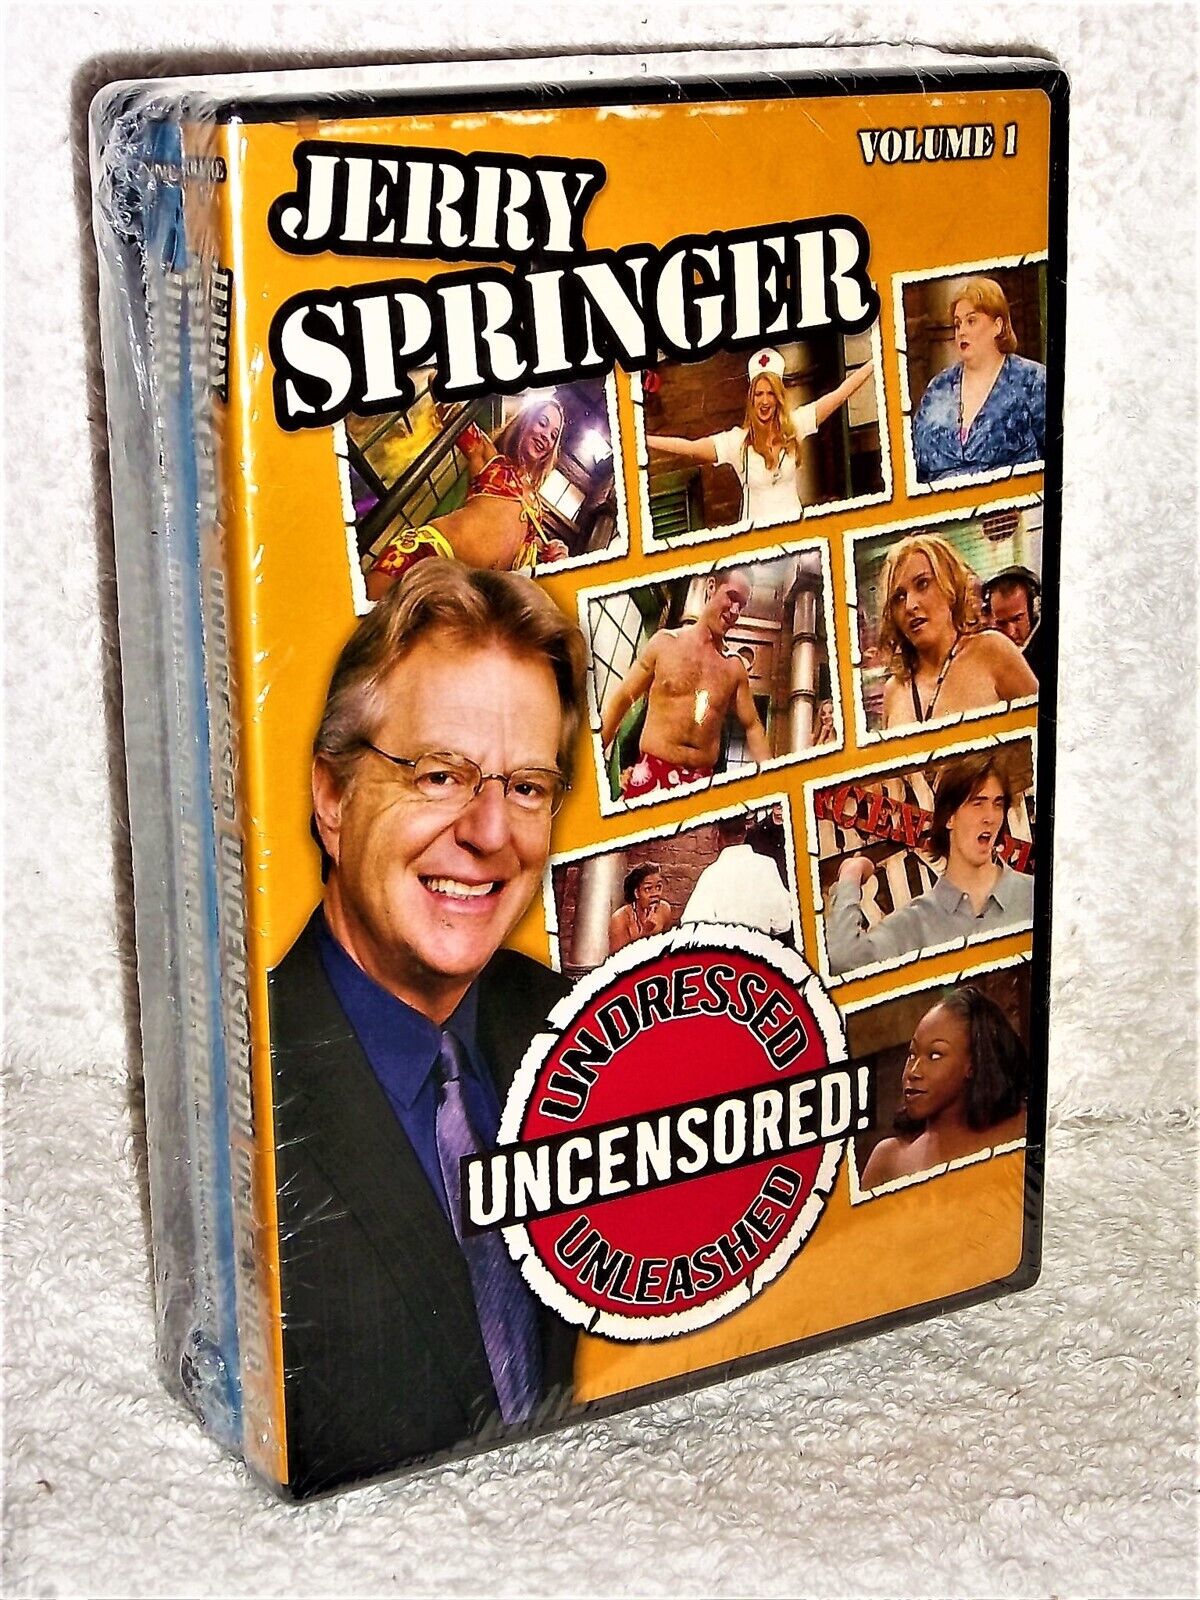 Best of Watch jerry springer uncensored